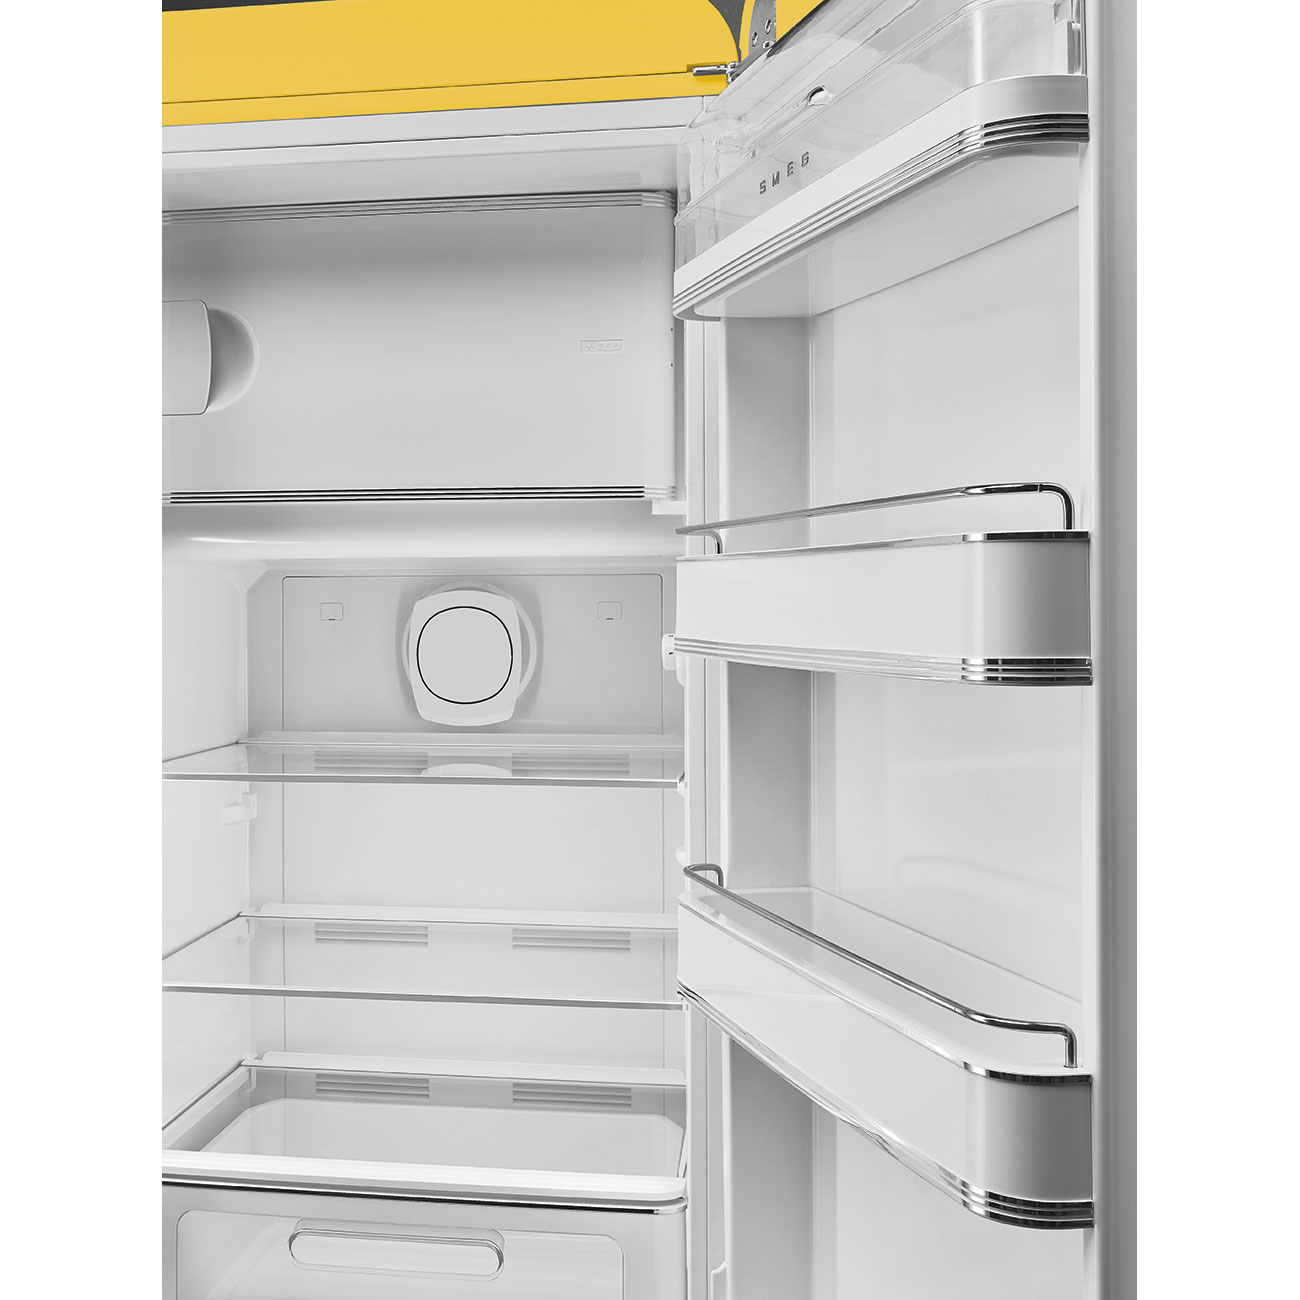 Yellow refrigerator - Smeg_3